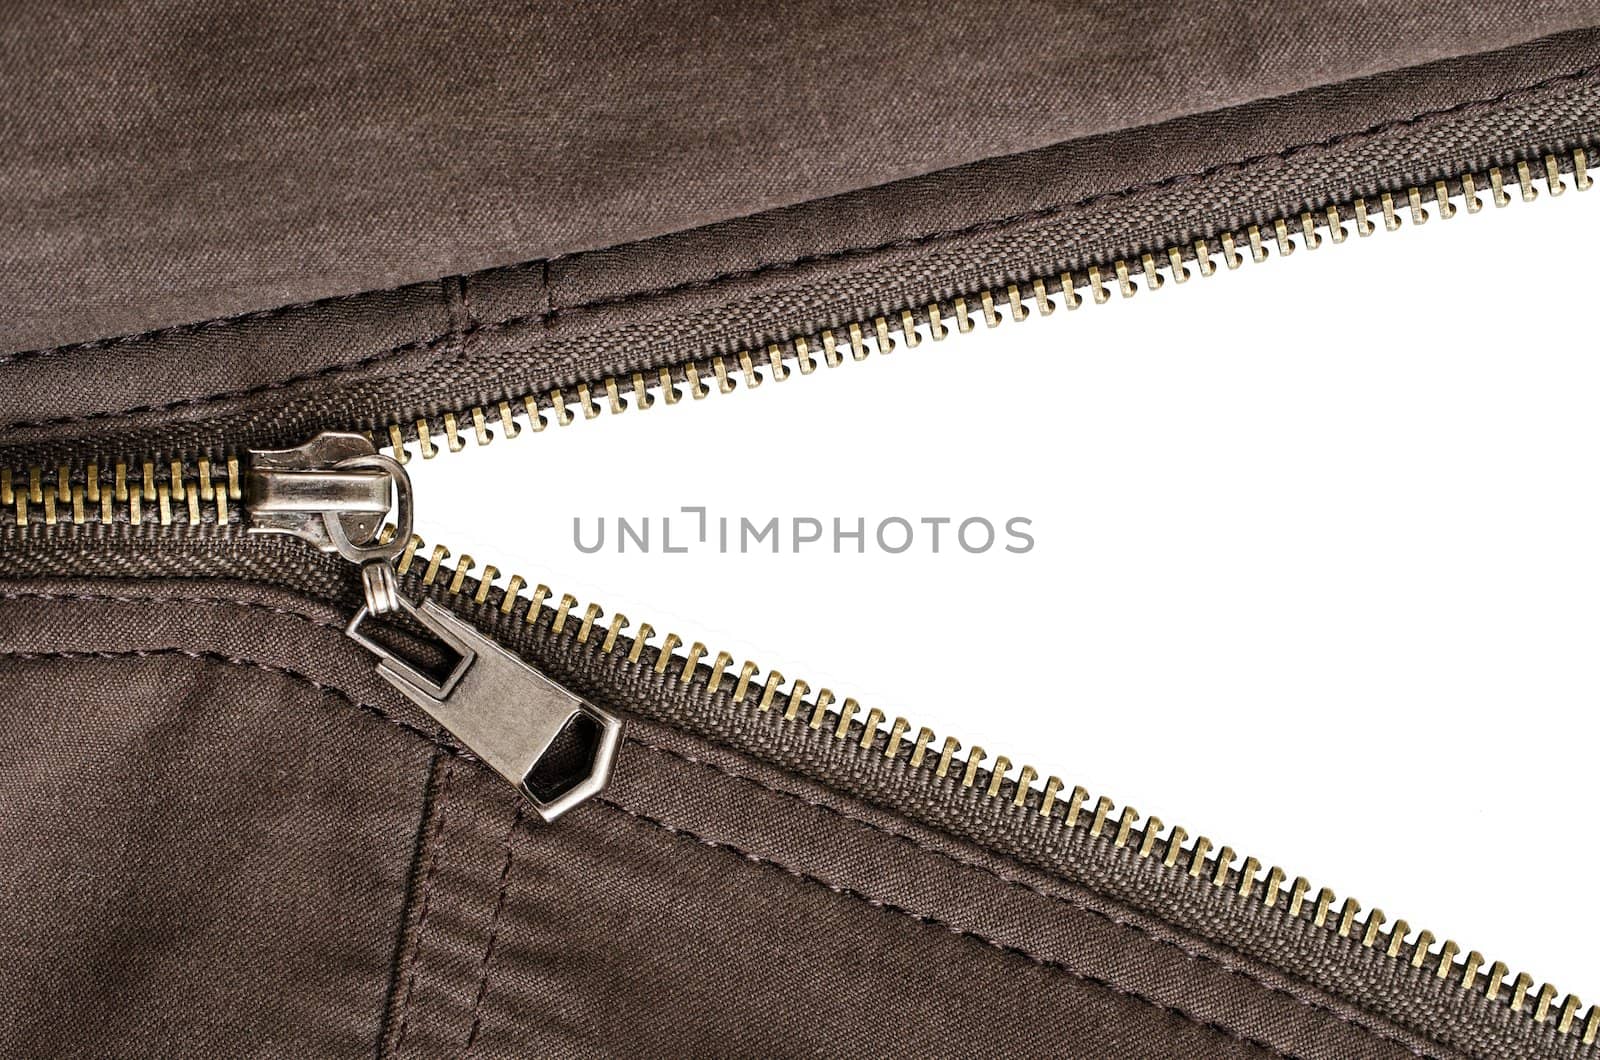 opened zipper over white background, horizontal shot